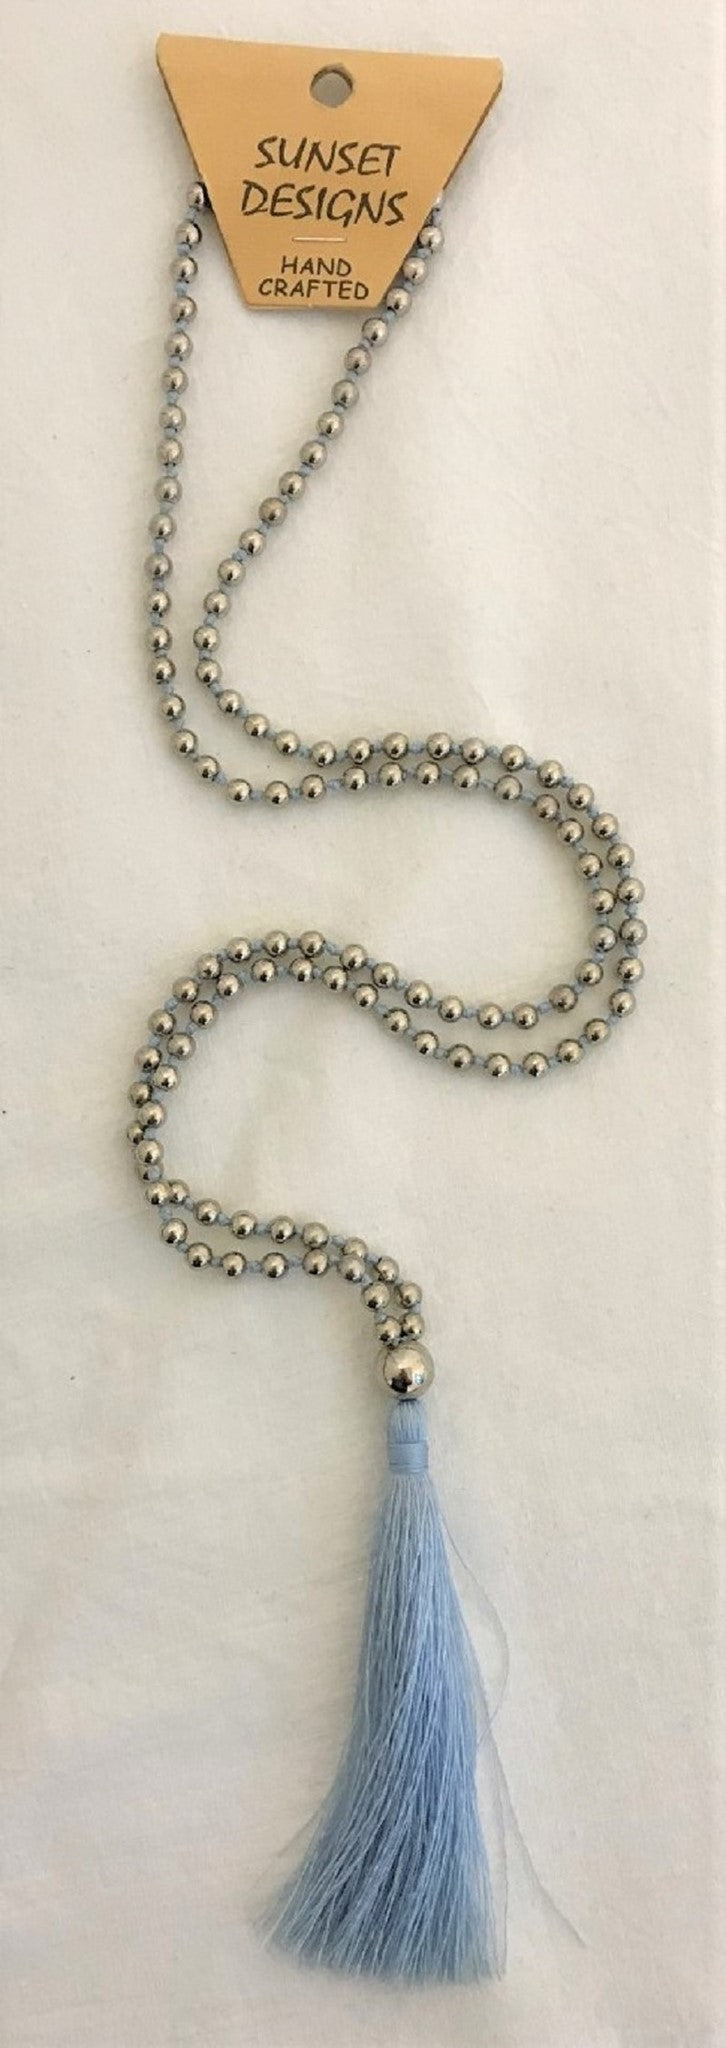 necklace - light blue - silver ball bead w/ string tassle